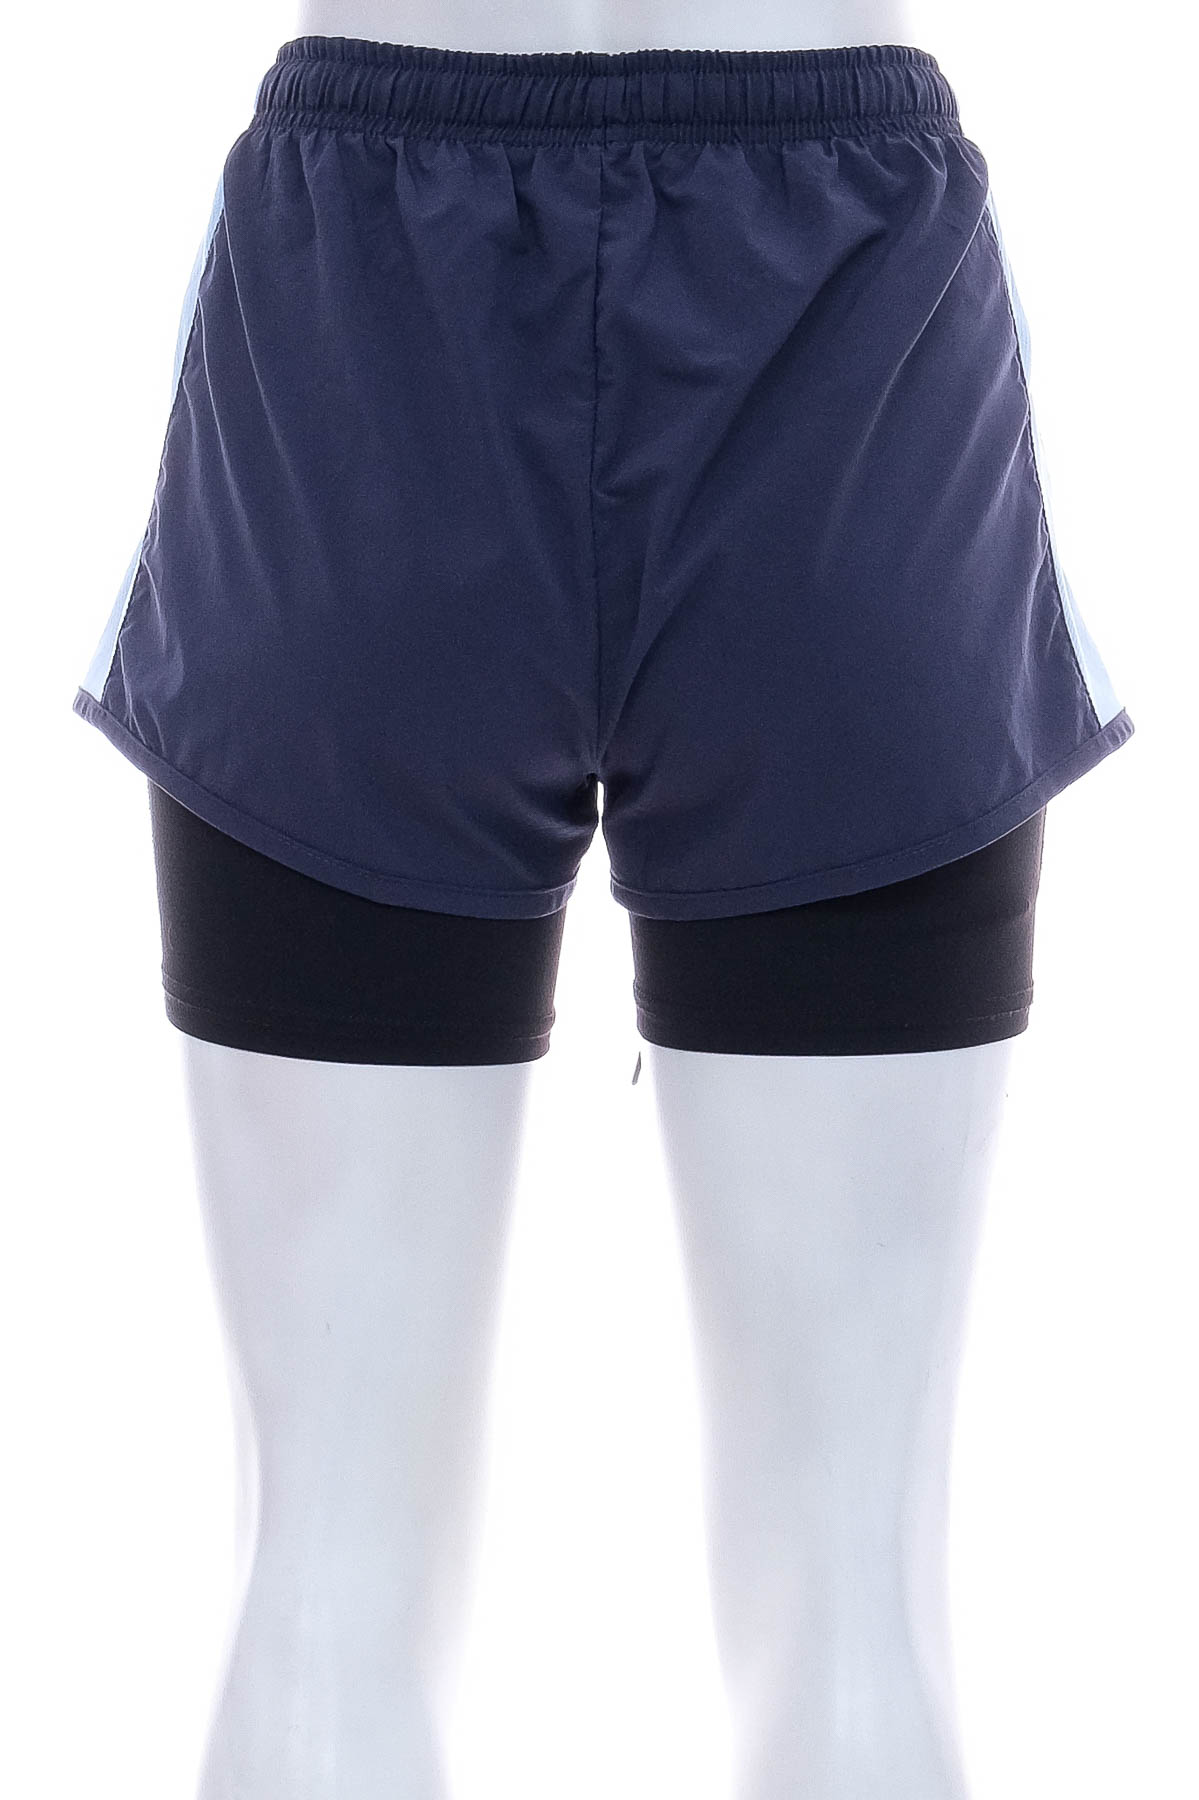 Women's shorts - MJ3 - 1